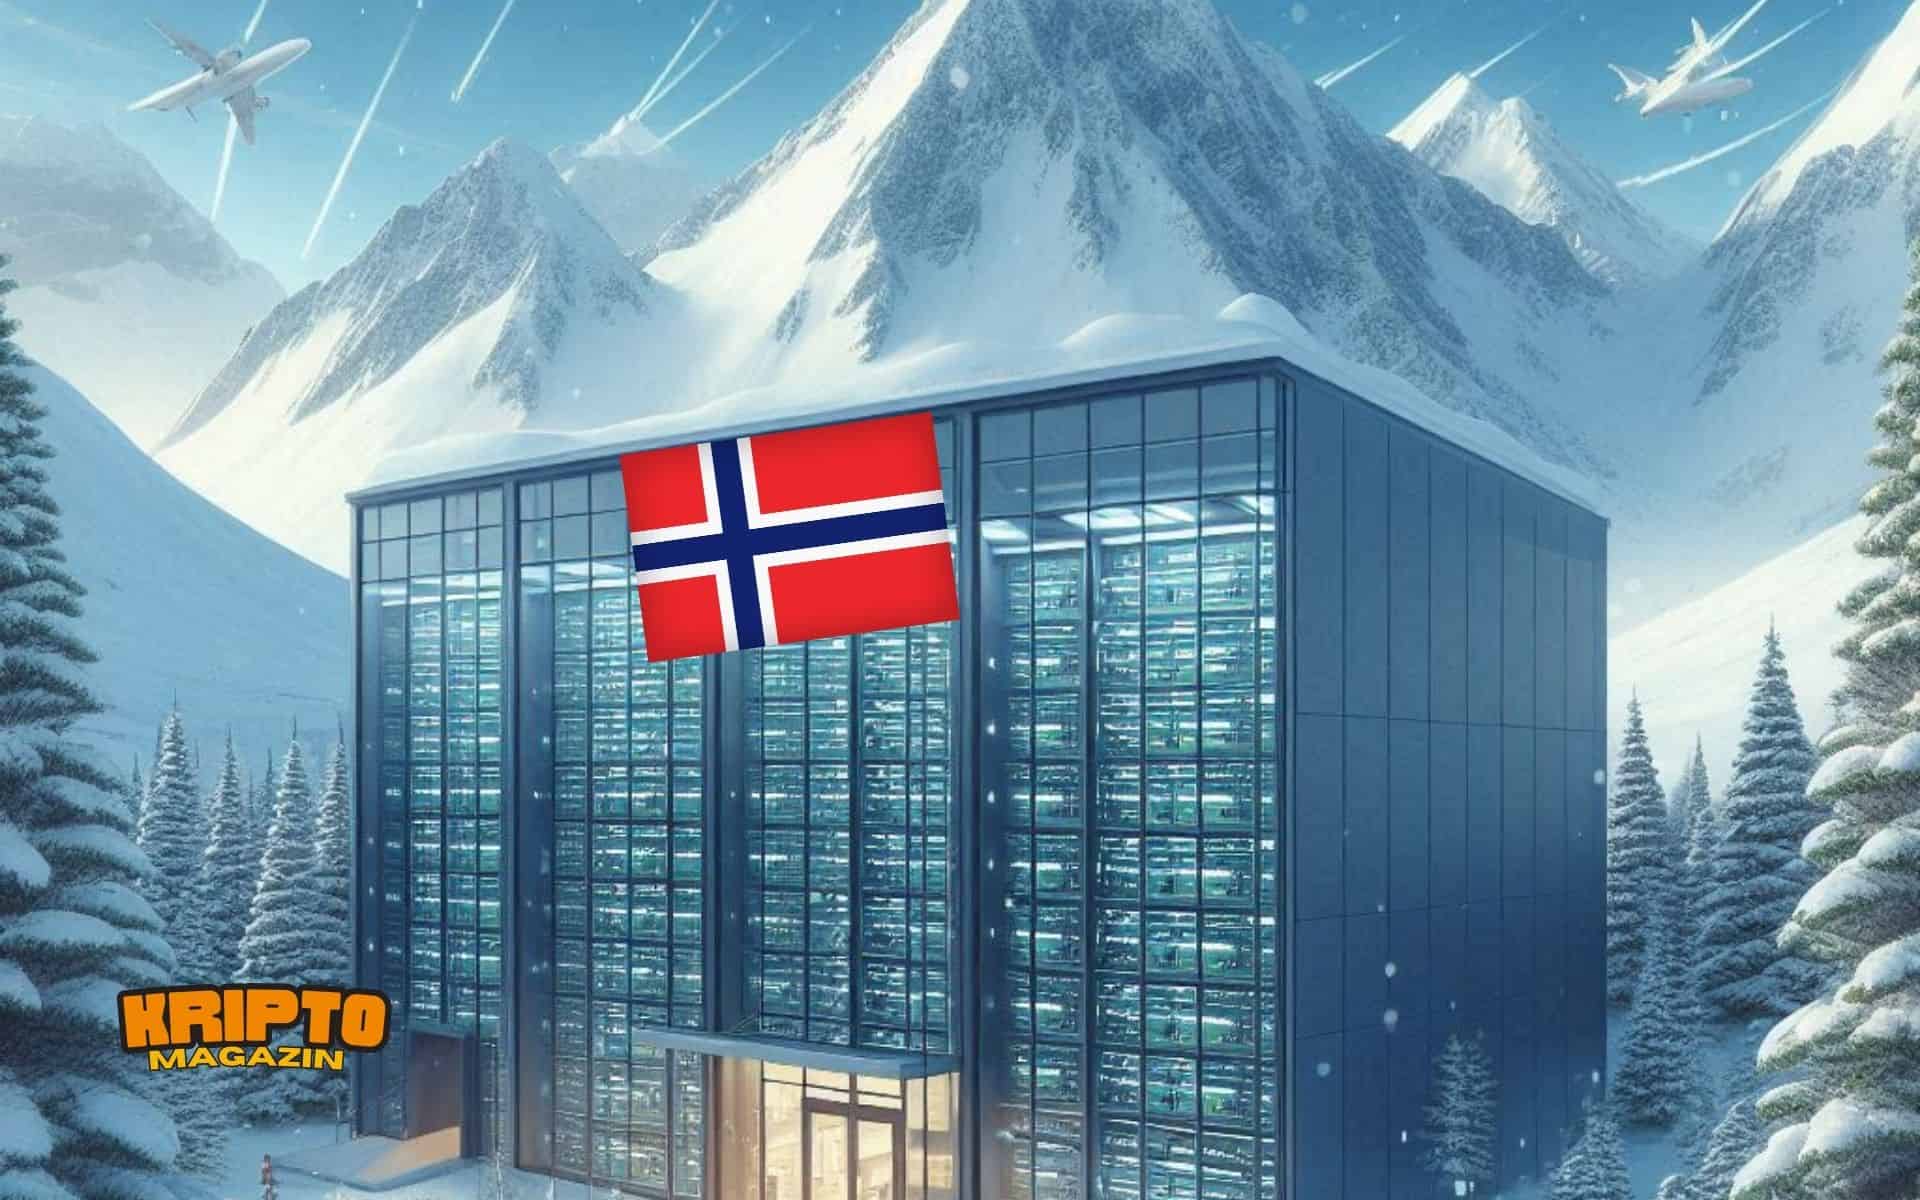 Kriptomagazin norvegia adatcenter